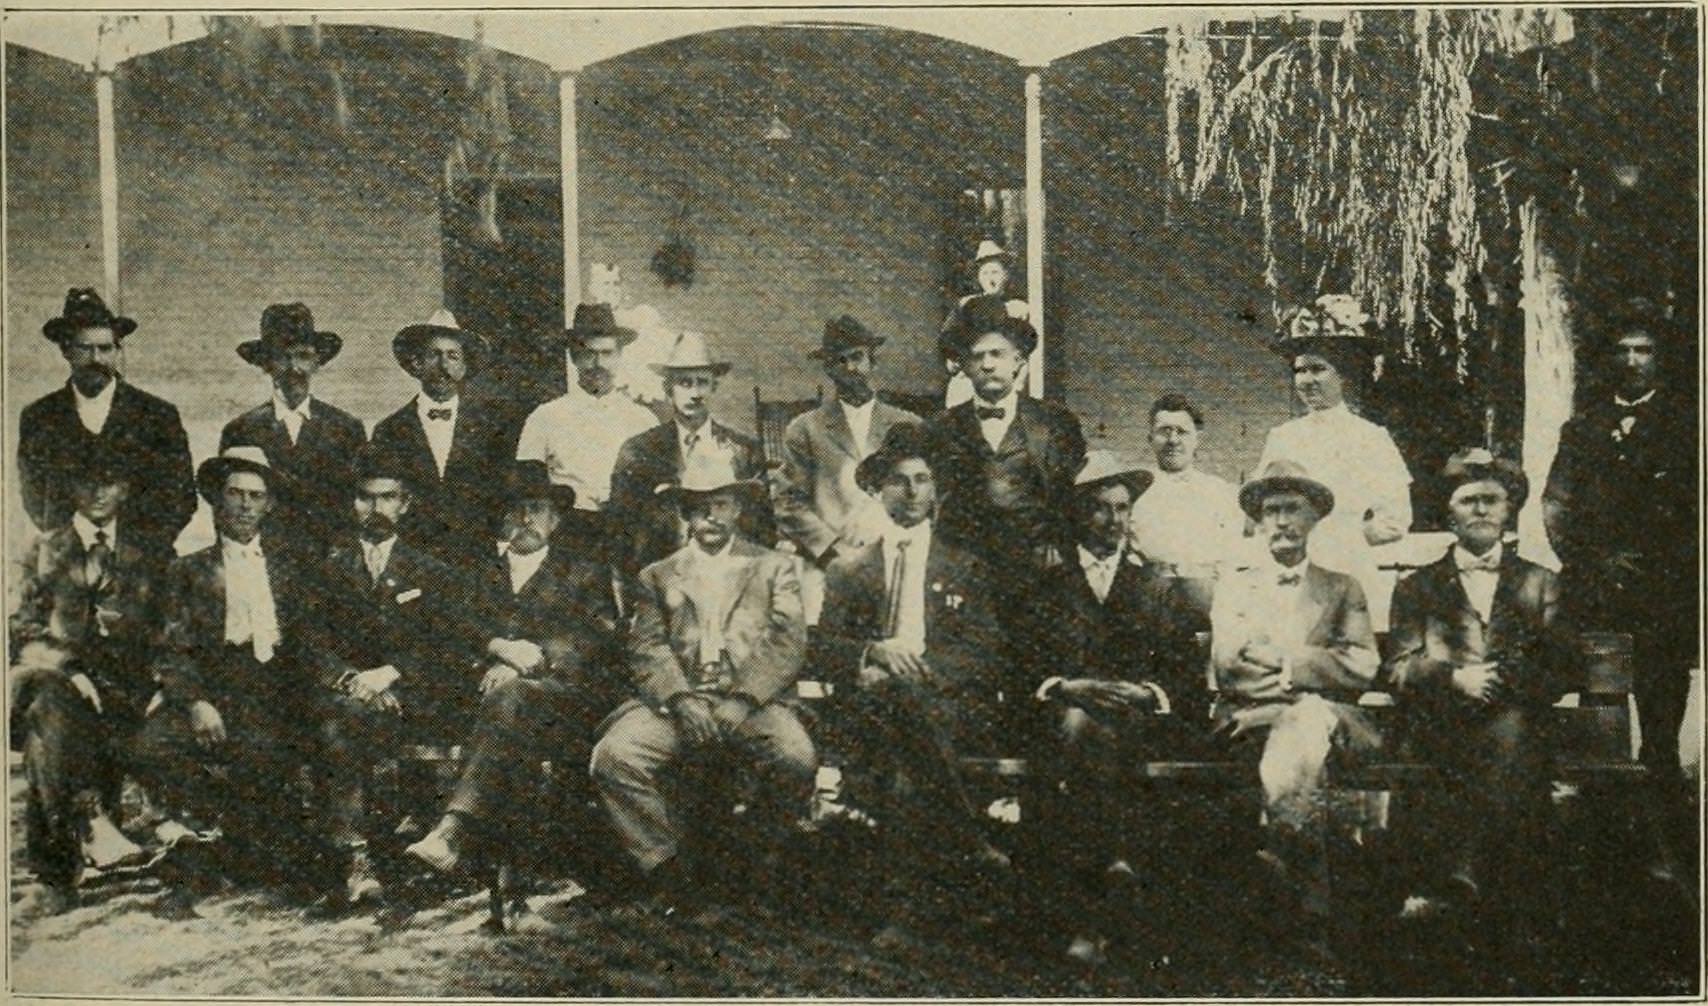 Pecos_Valley_Bee-keepers_Association_1910.jpg